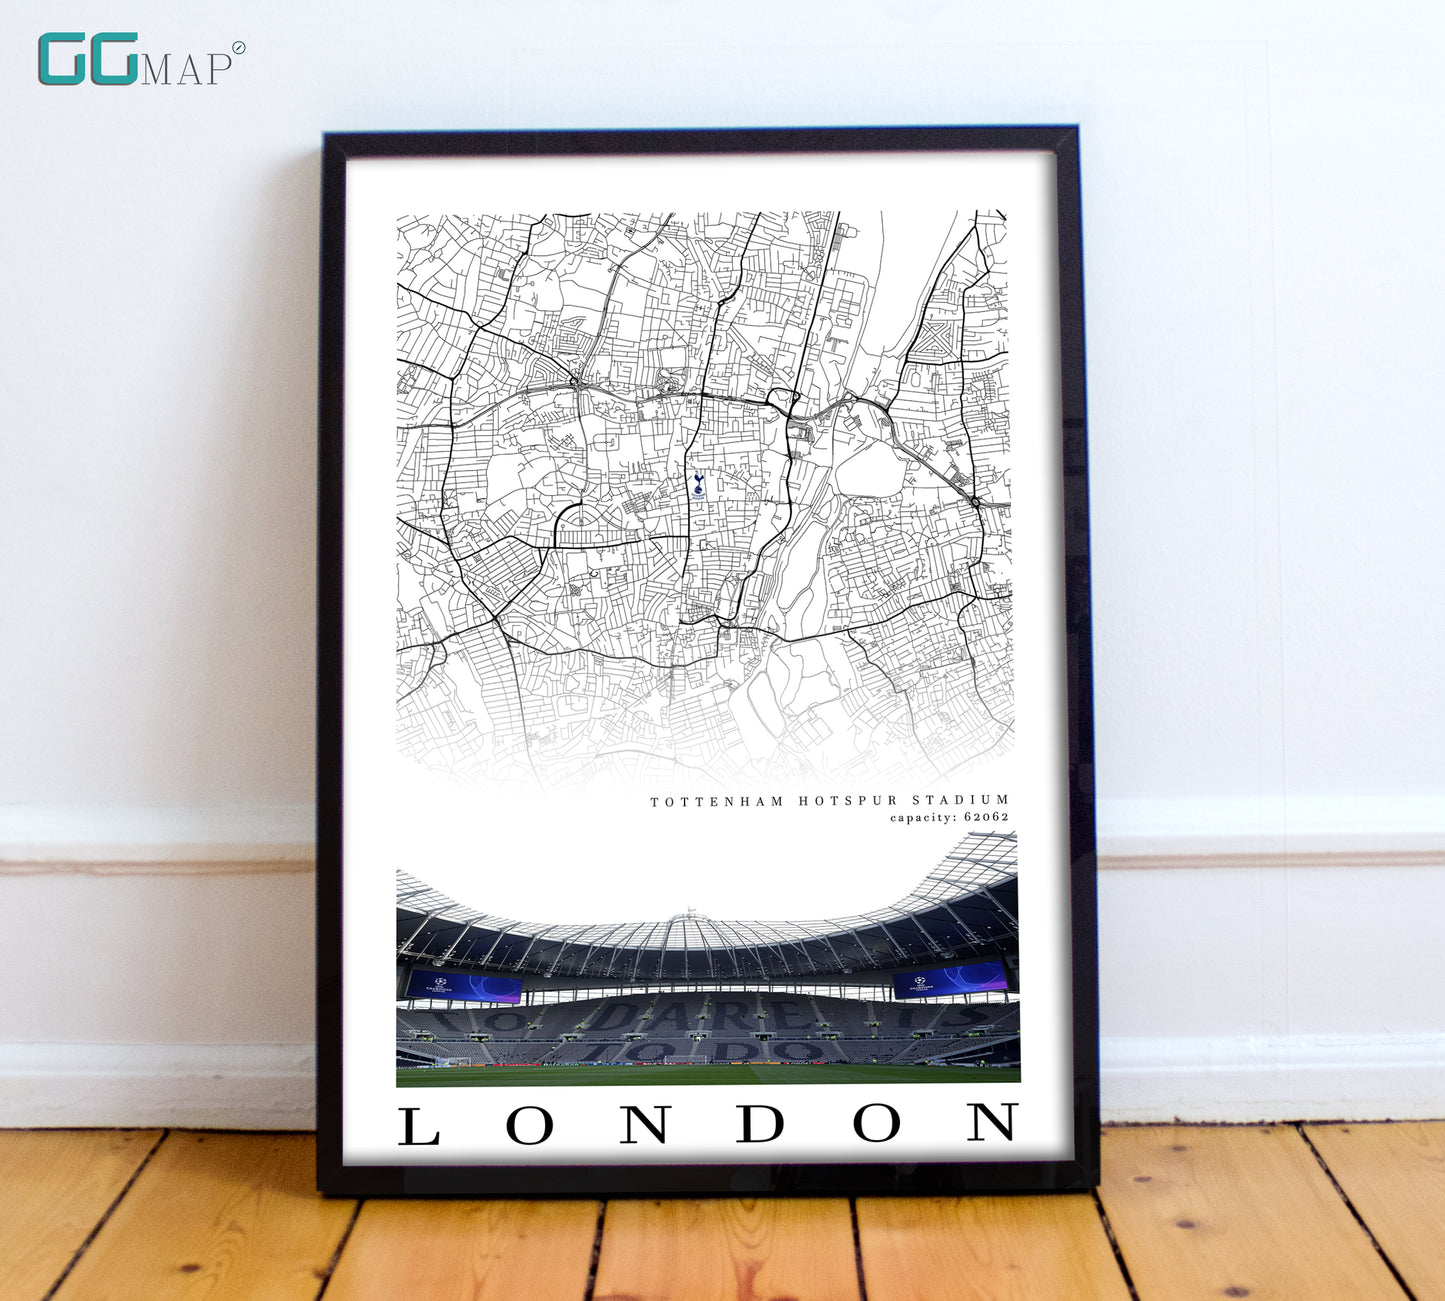 Map of London - Tottenham Hotspur Stadium